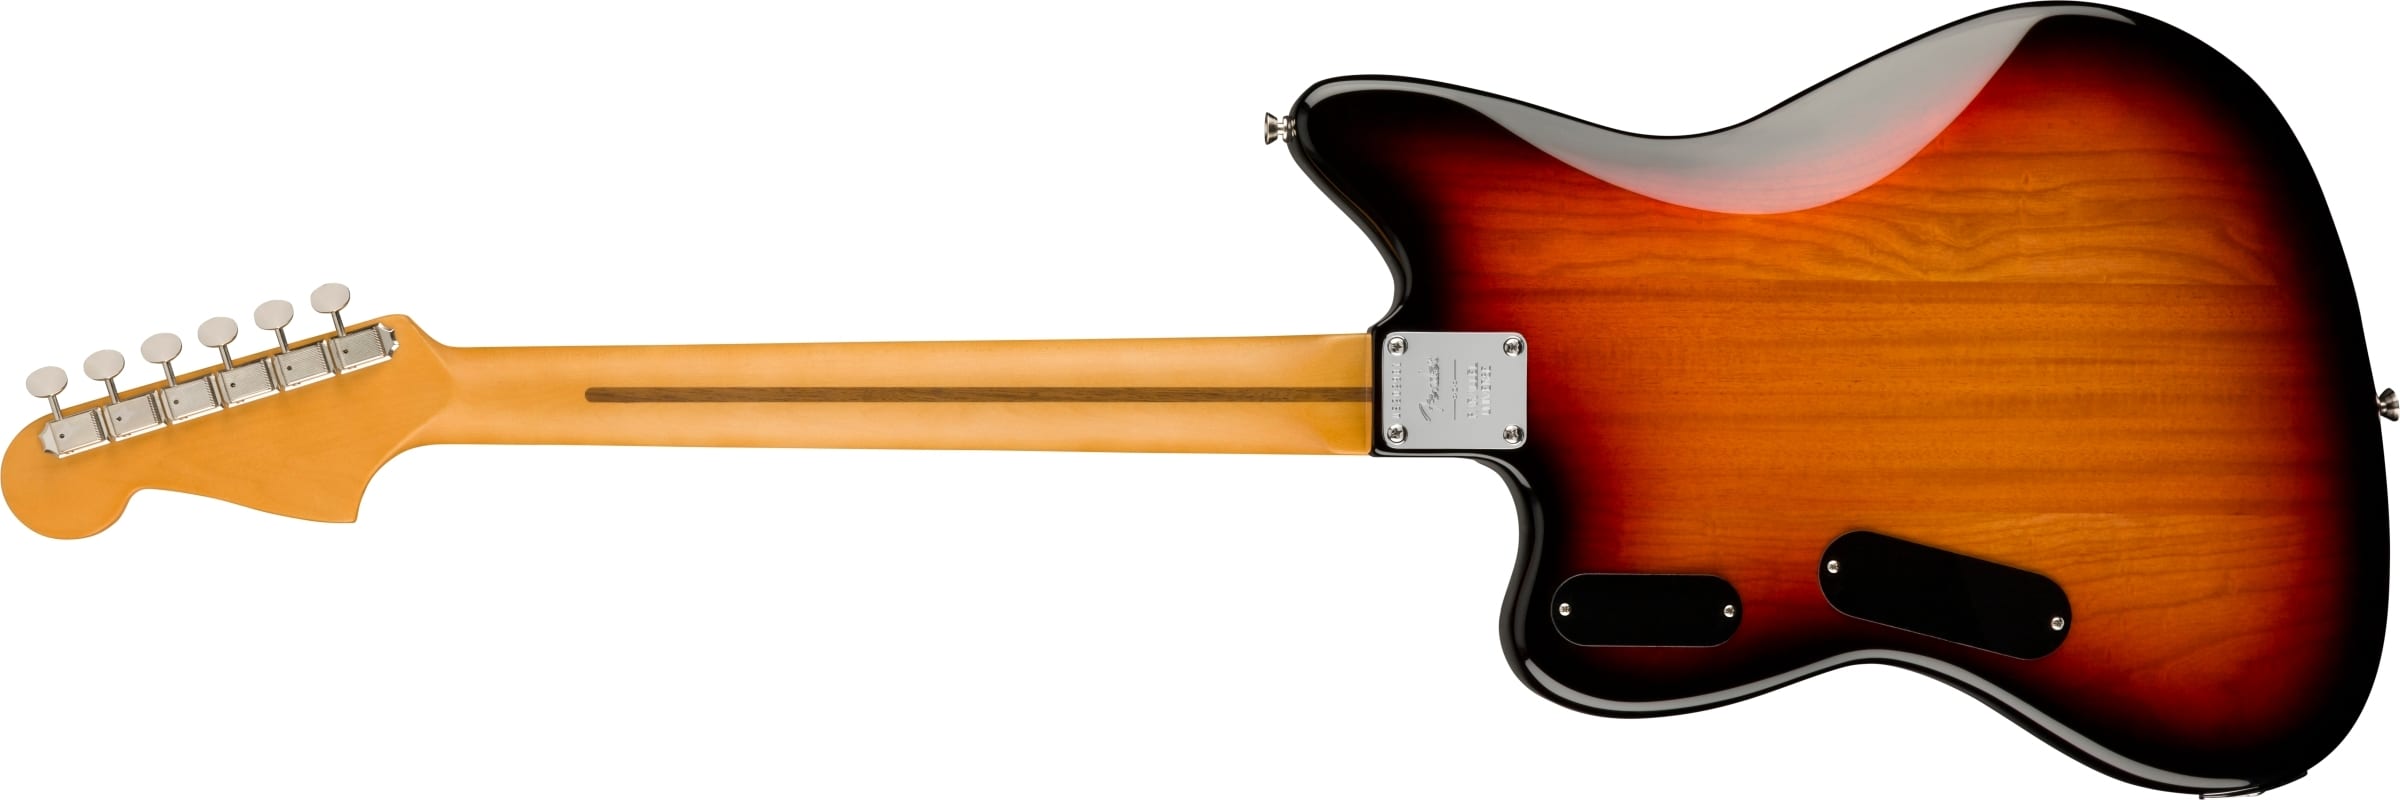 Fender Parallel Universe II Spark-O-Matic Jazzmaster rear